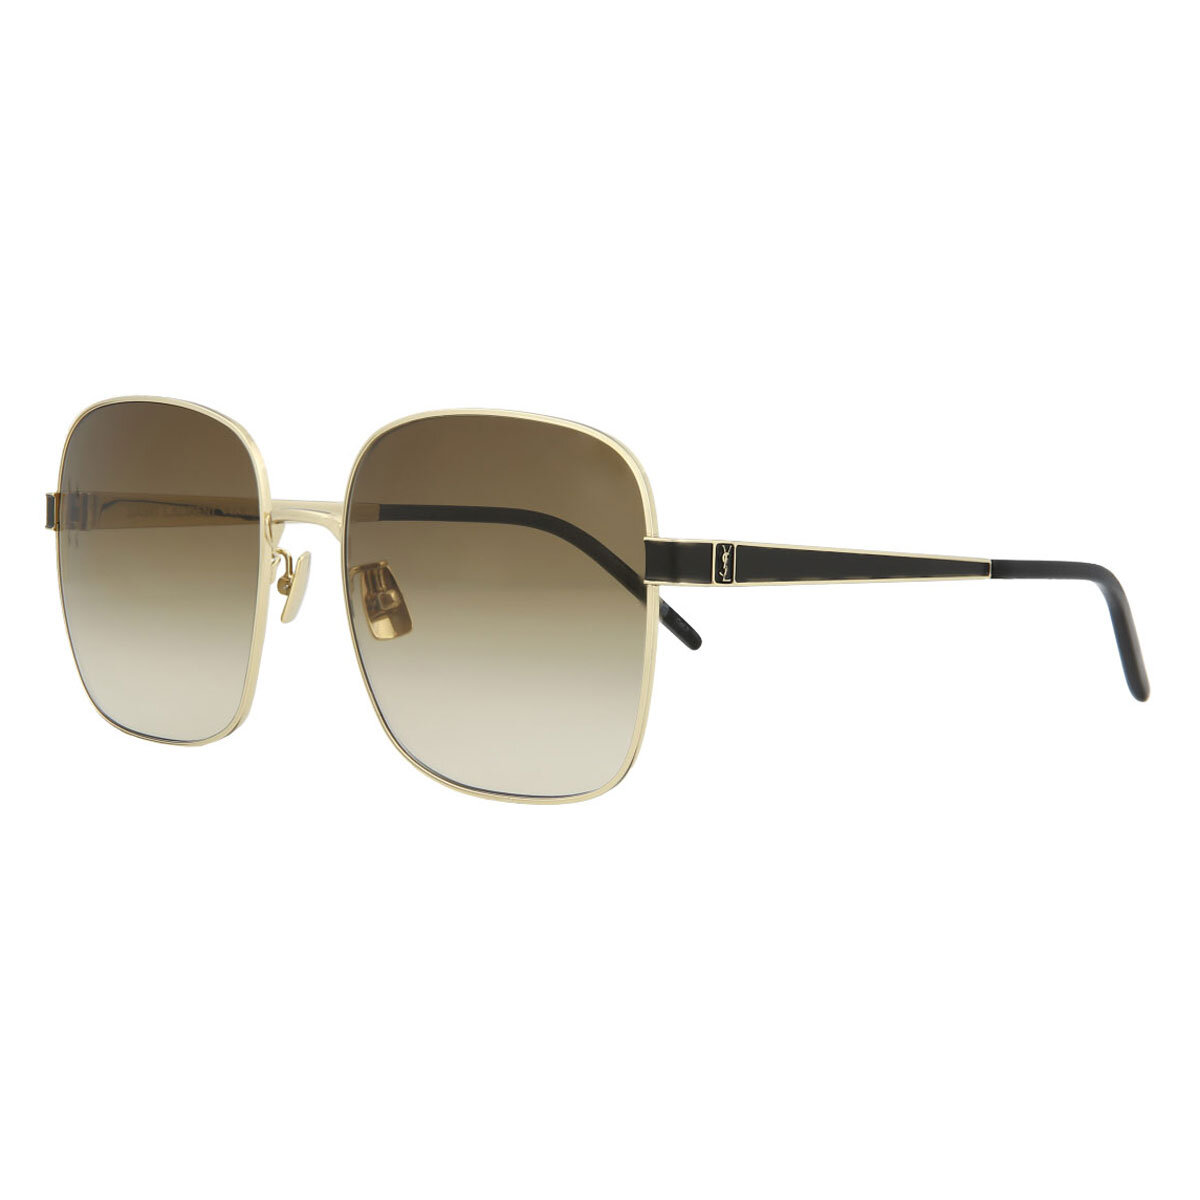 Saint Laurent SLM75 004 Sunglasses